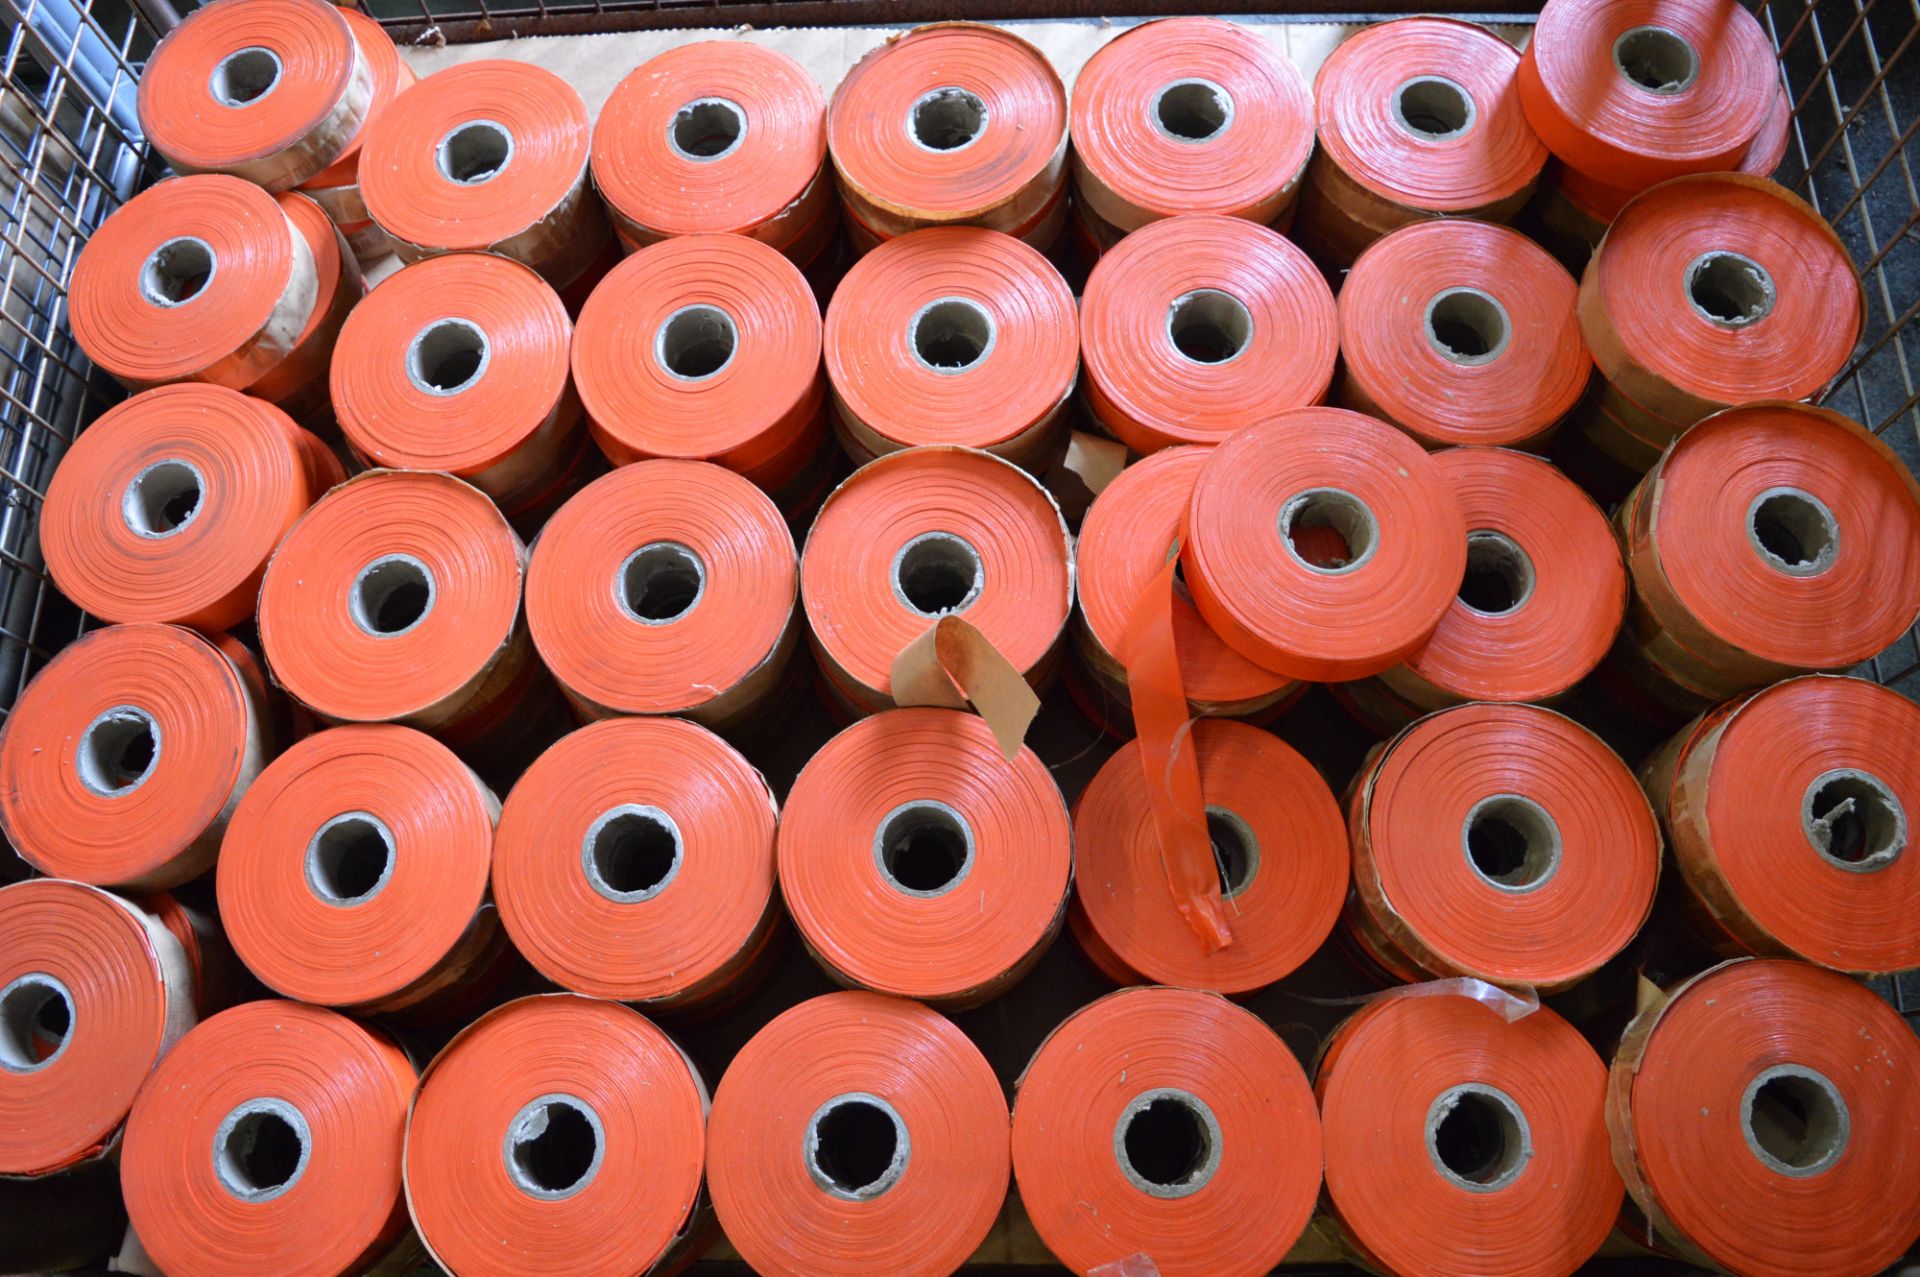 145x Rolls Orange Tape. - Image 2 of 3